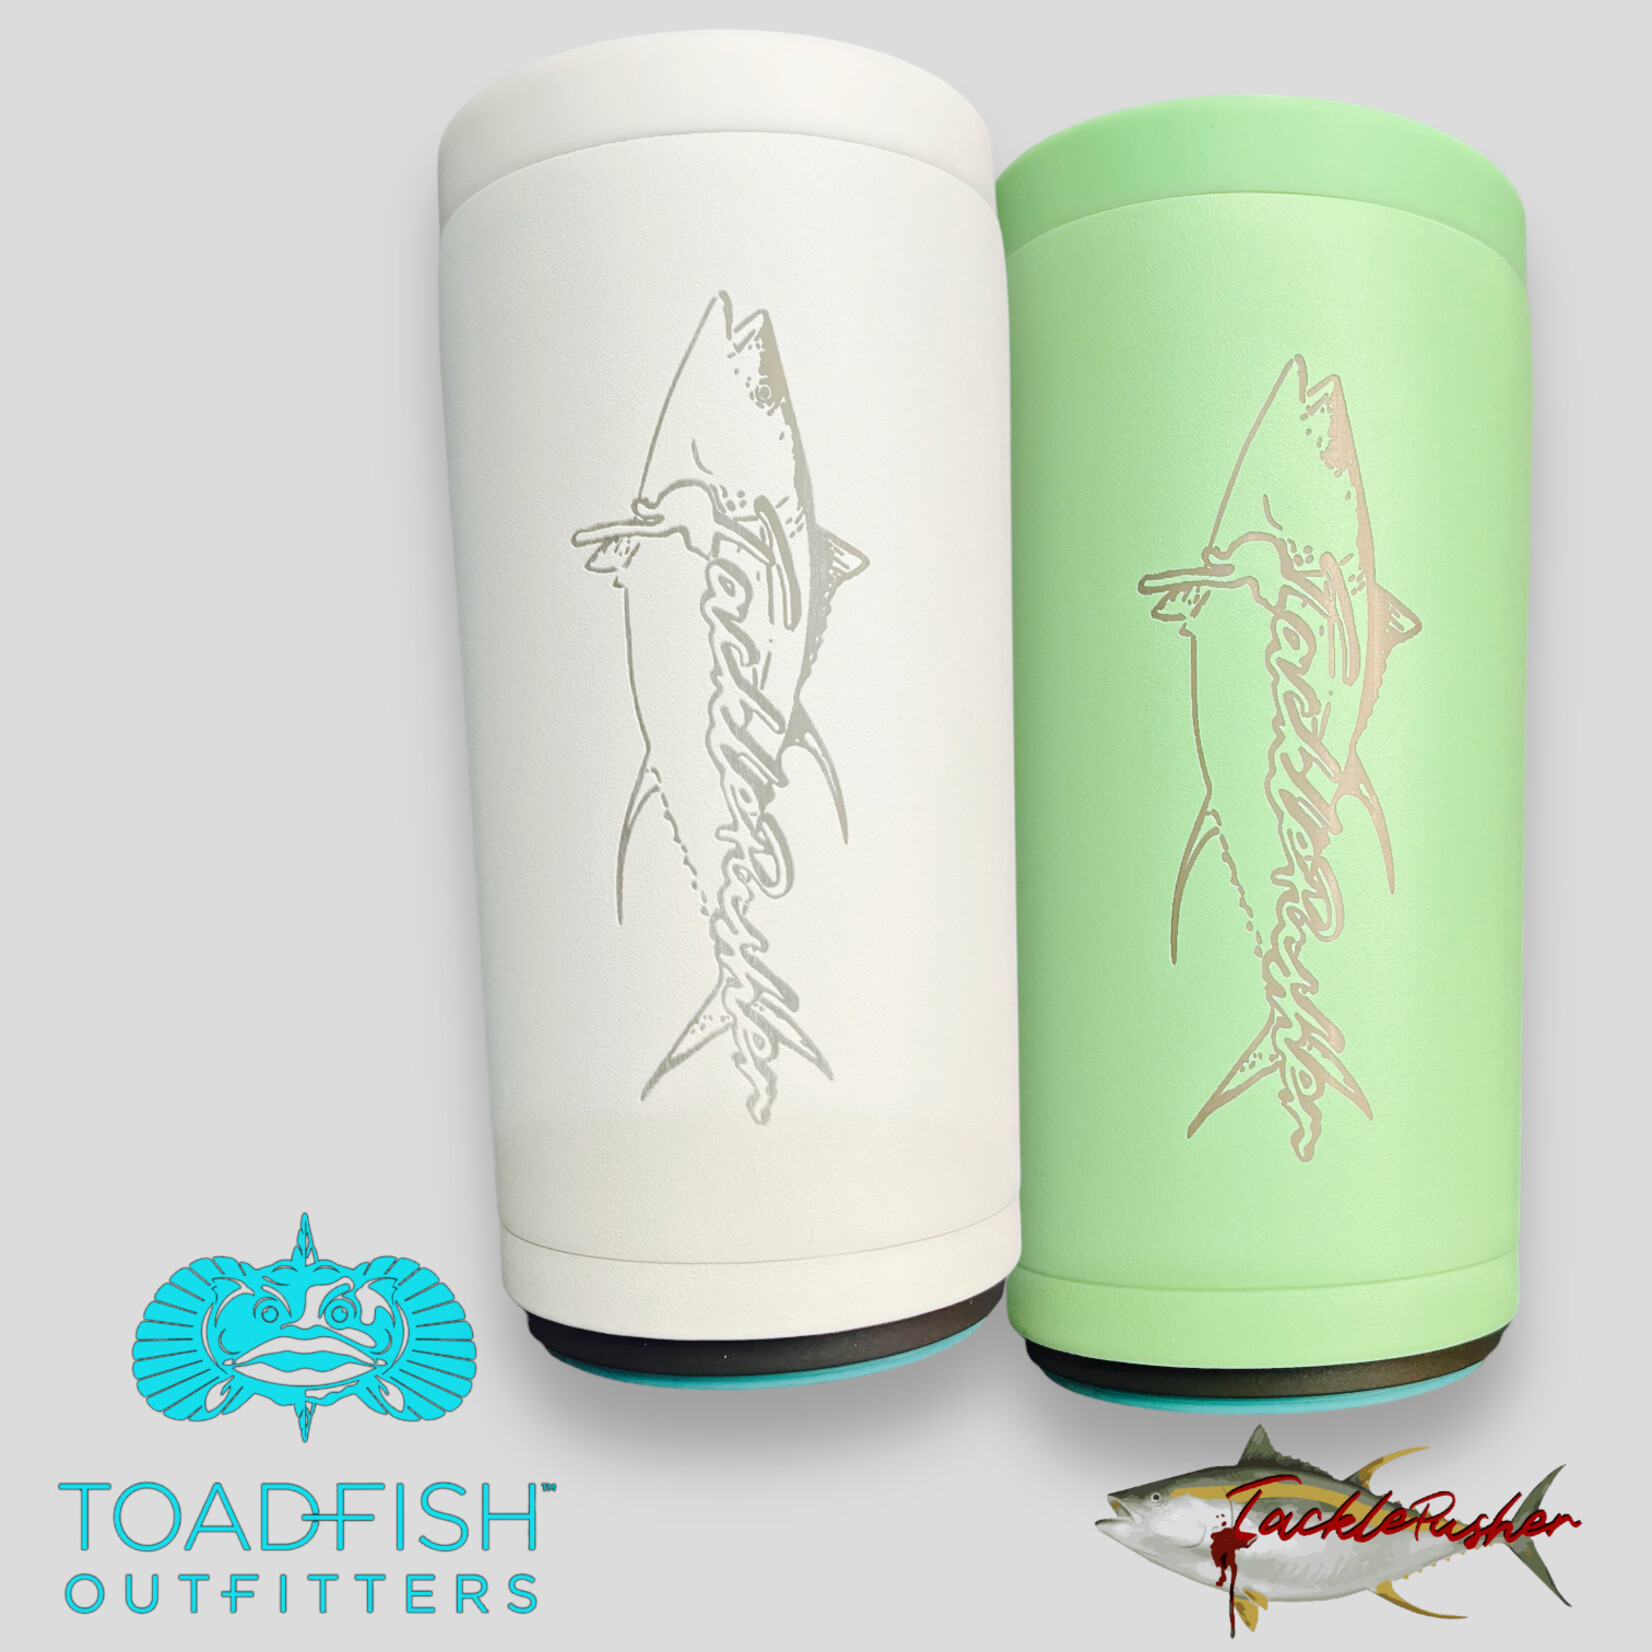  Toadfish: Drinkware